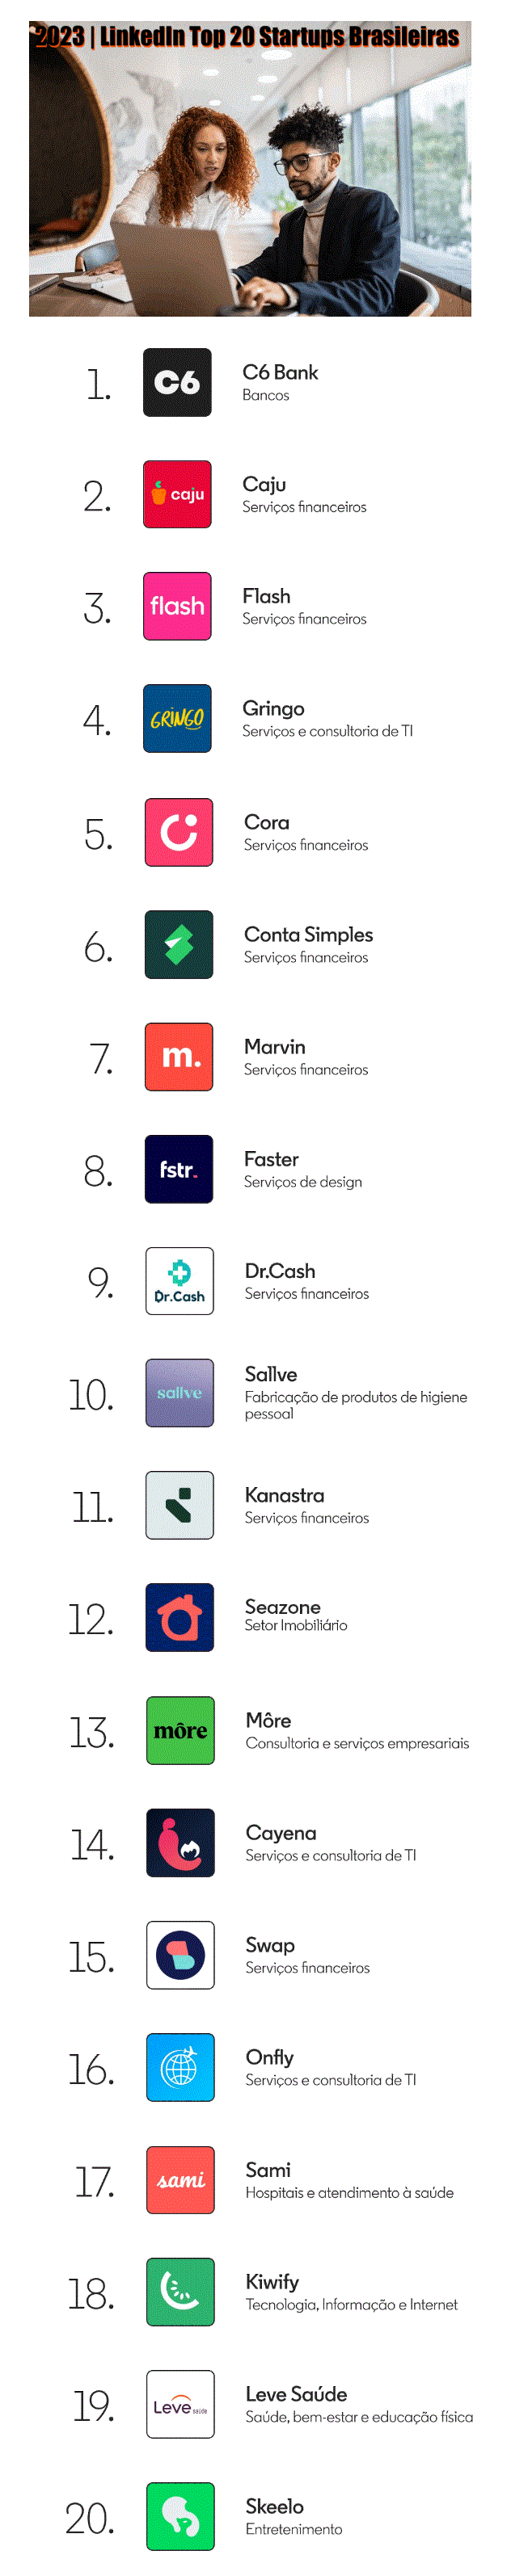 2023 | LinkedIn Top 20 Brazilian Startup Companies - Rising Stars